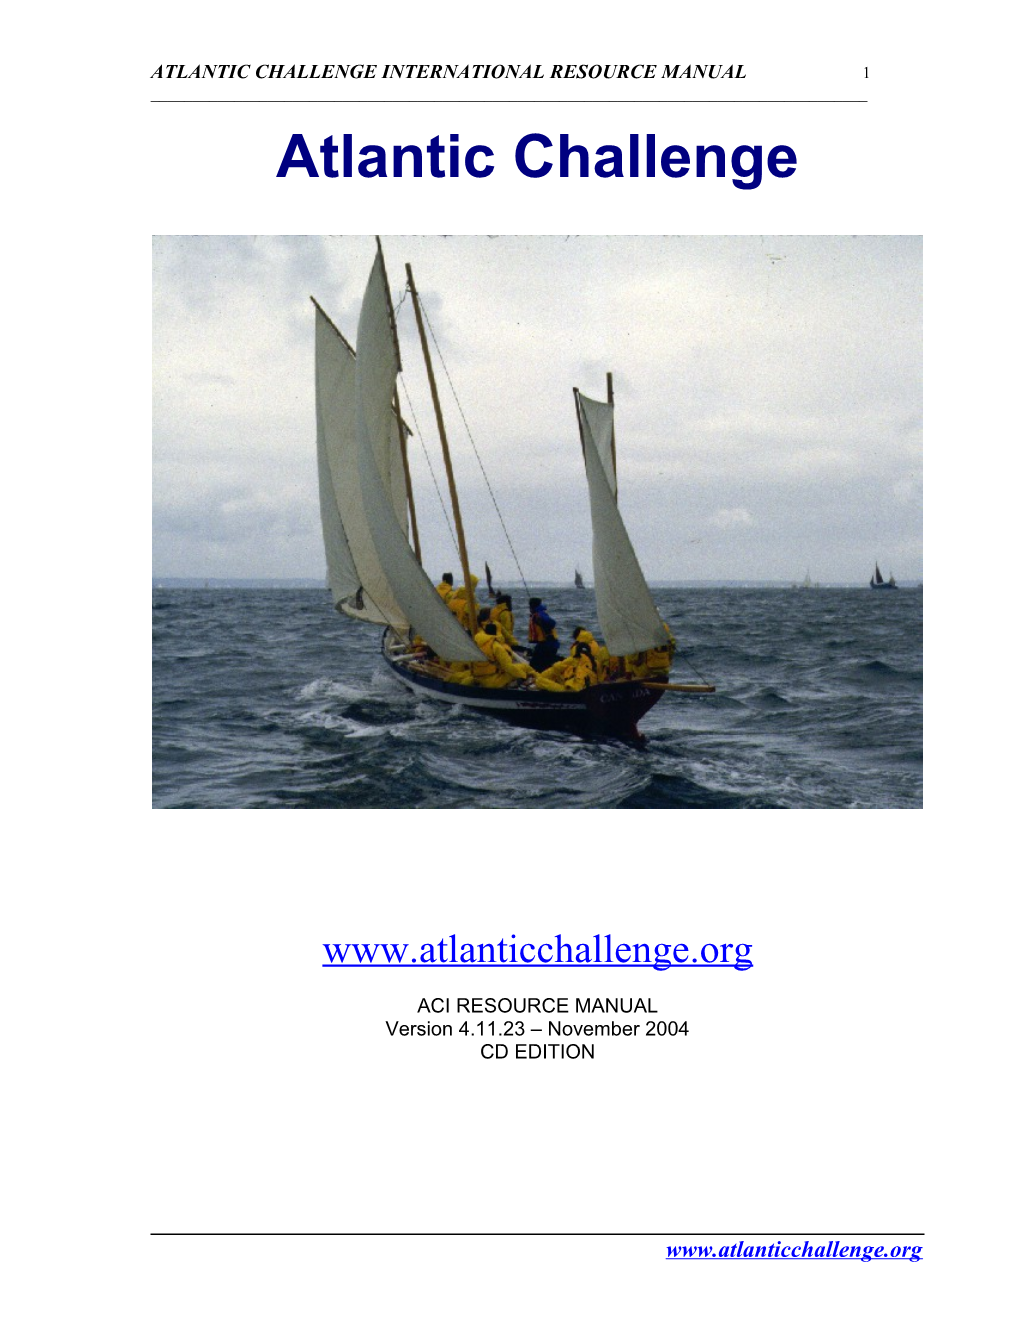 Atlantic Challenge International Resource Manual 90 ______